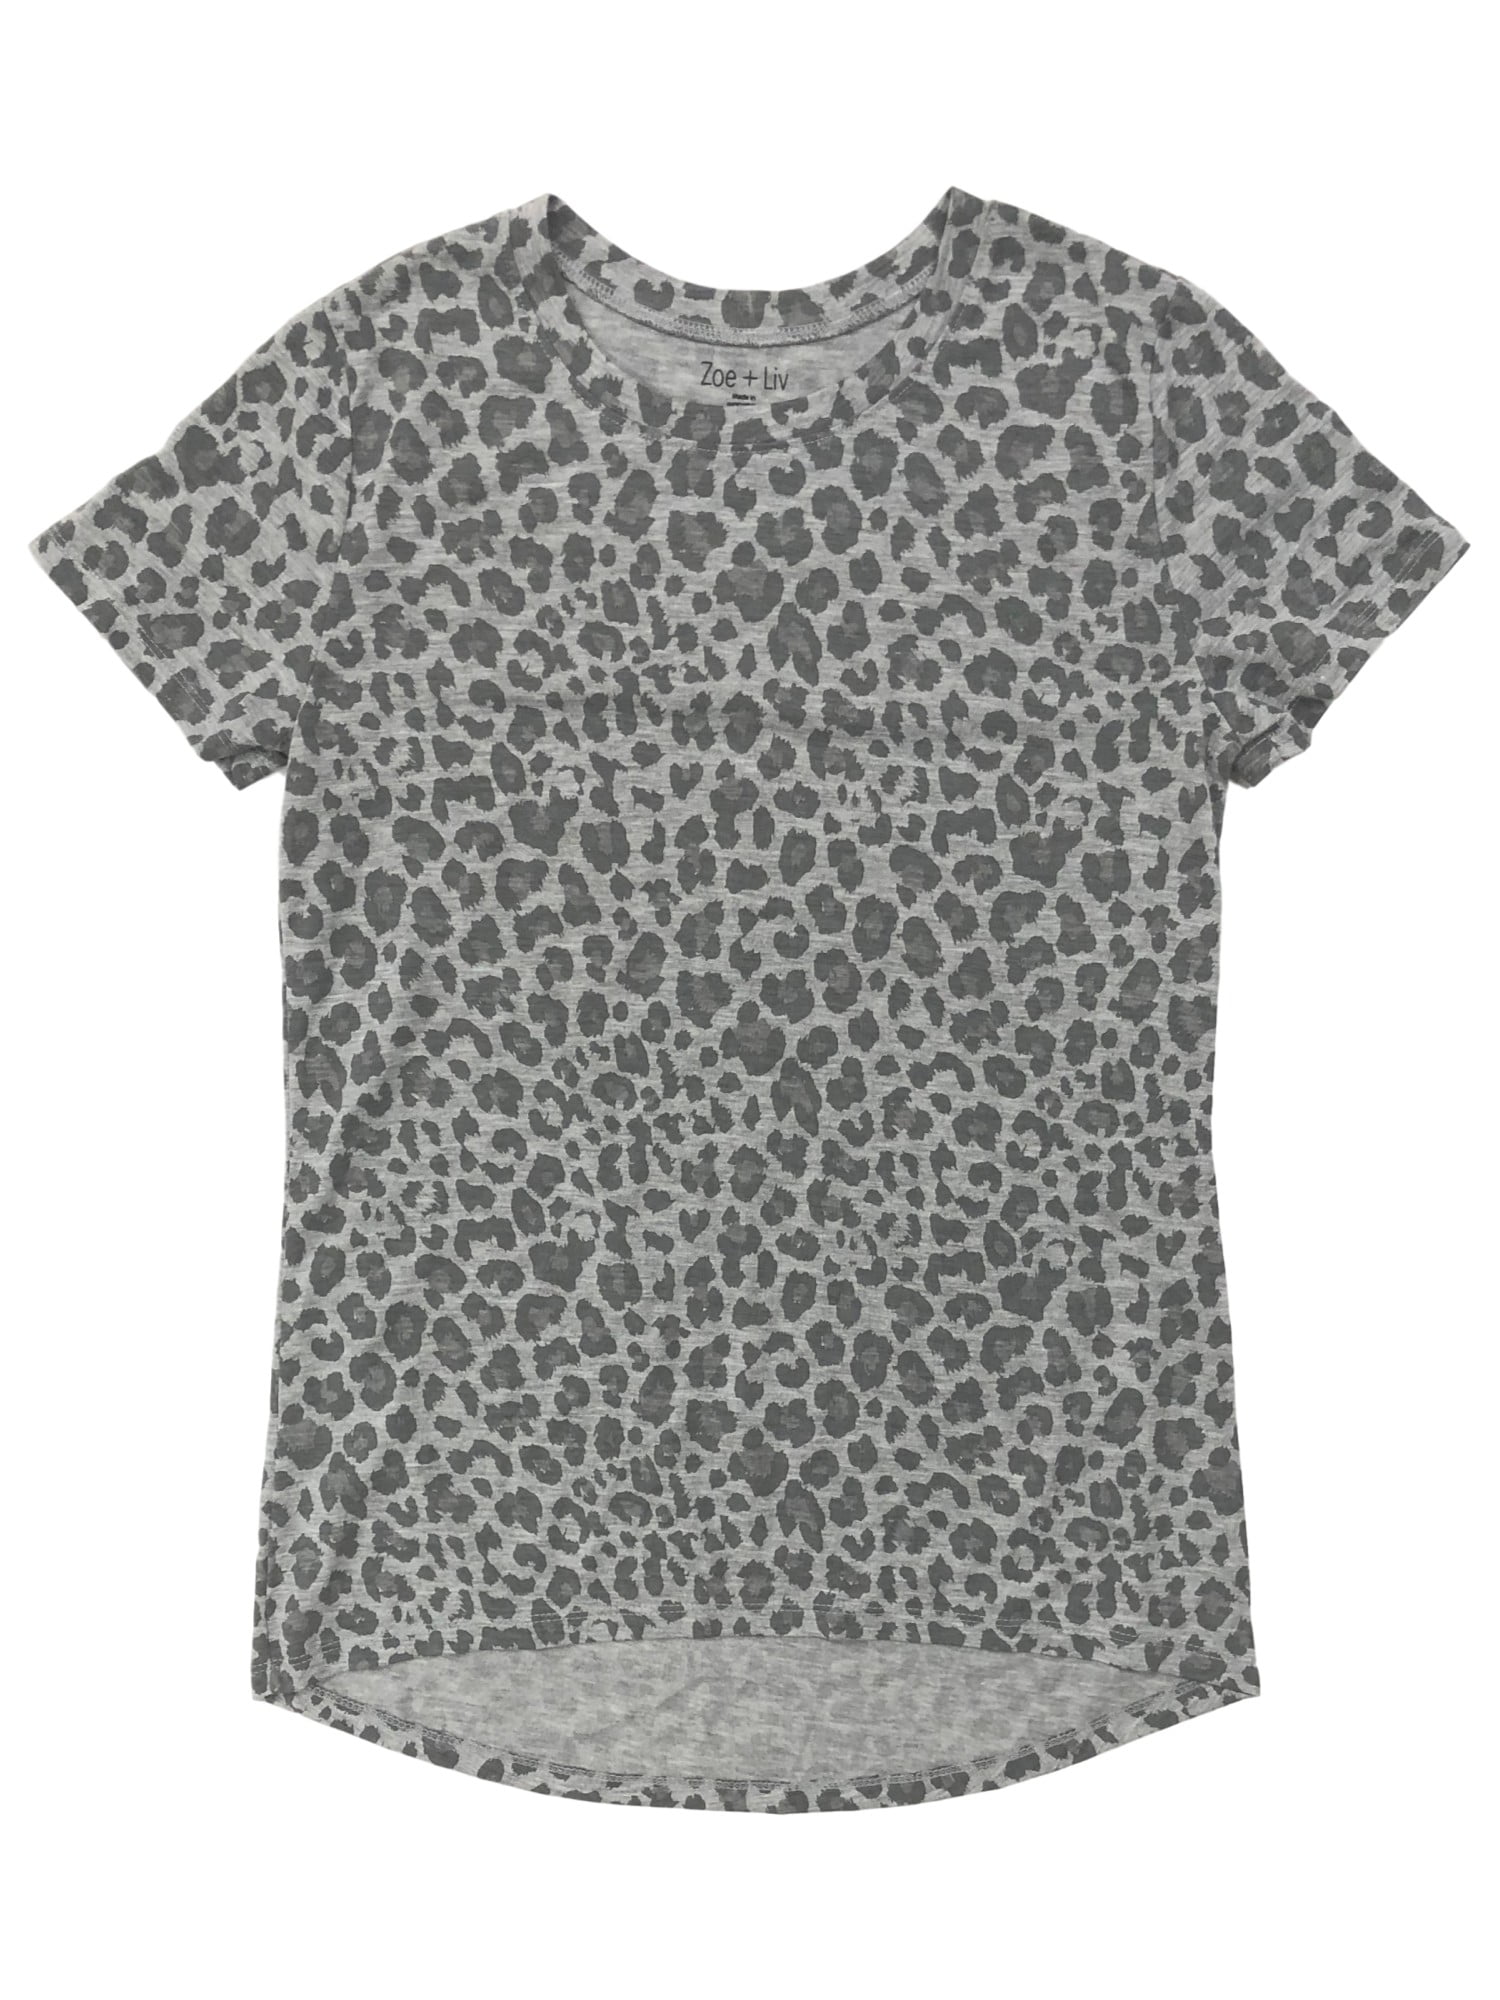 Womens Gray Leopard Print T-Shirt Cheetah Tee Shirt Small - Walmart.com